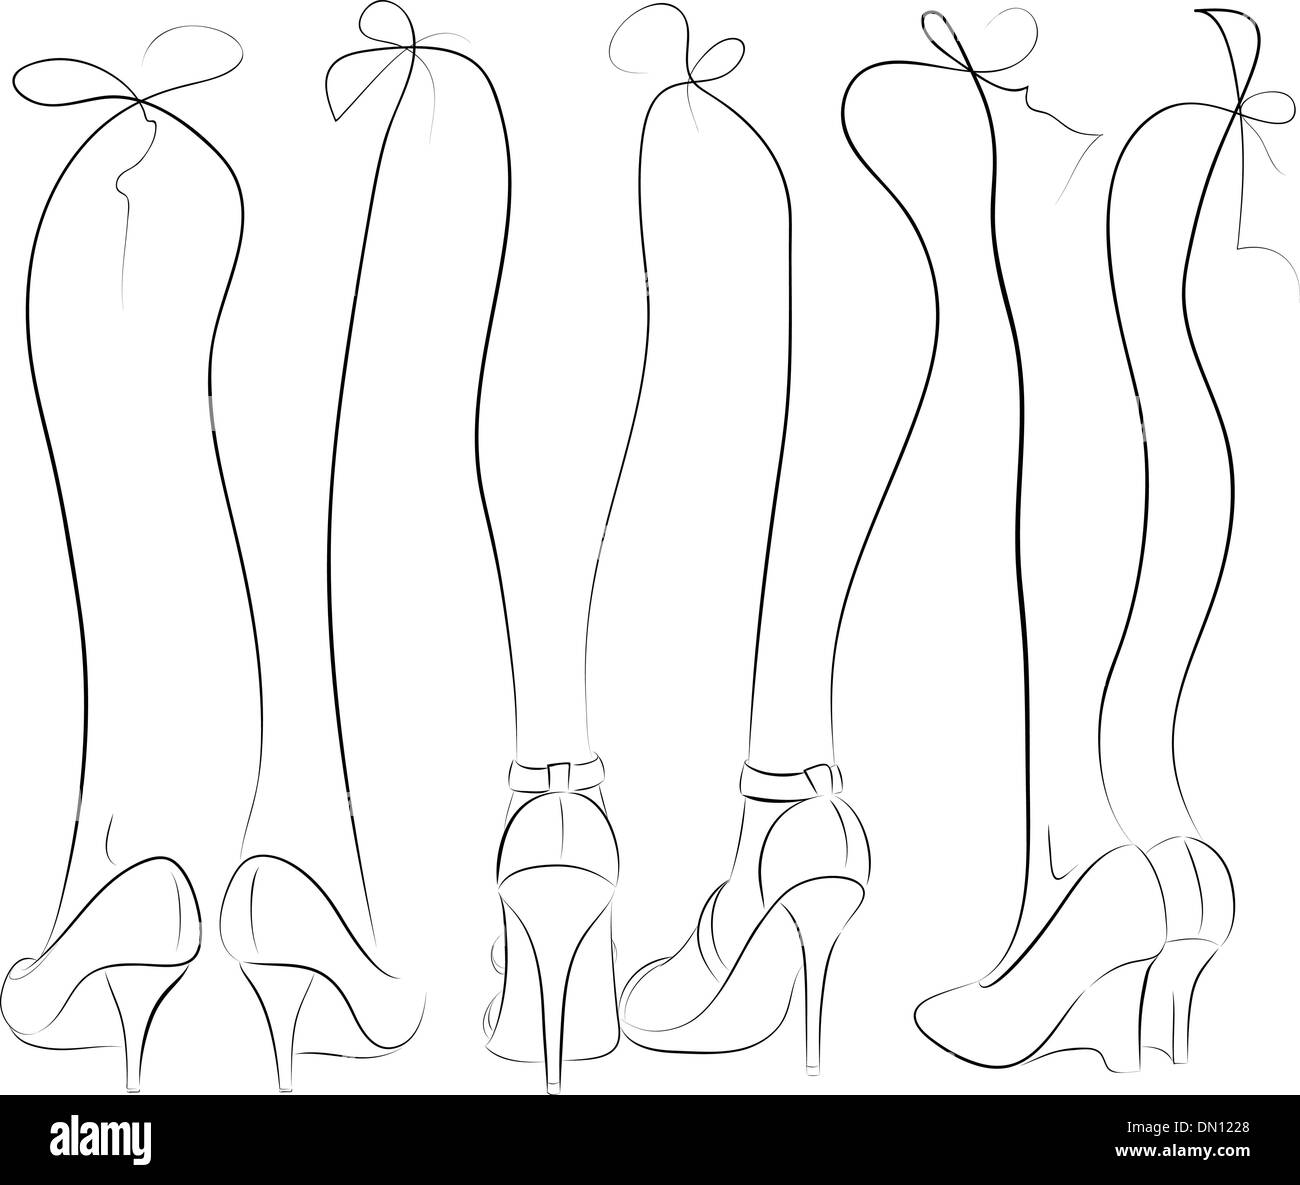 Legs in bows sketch Stock Vector